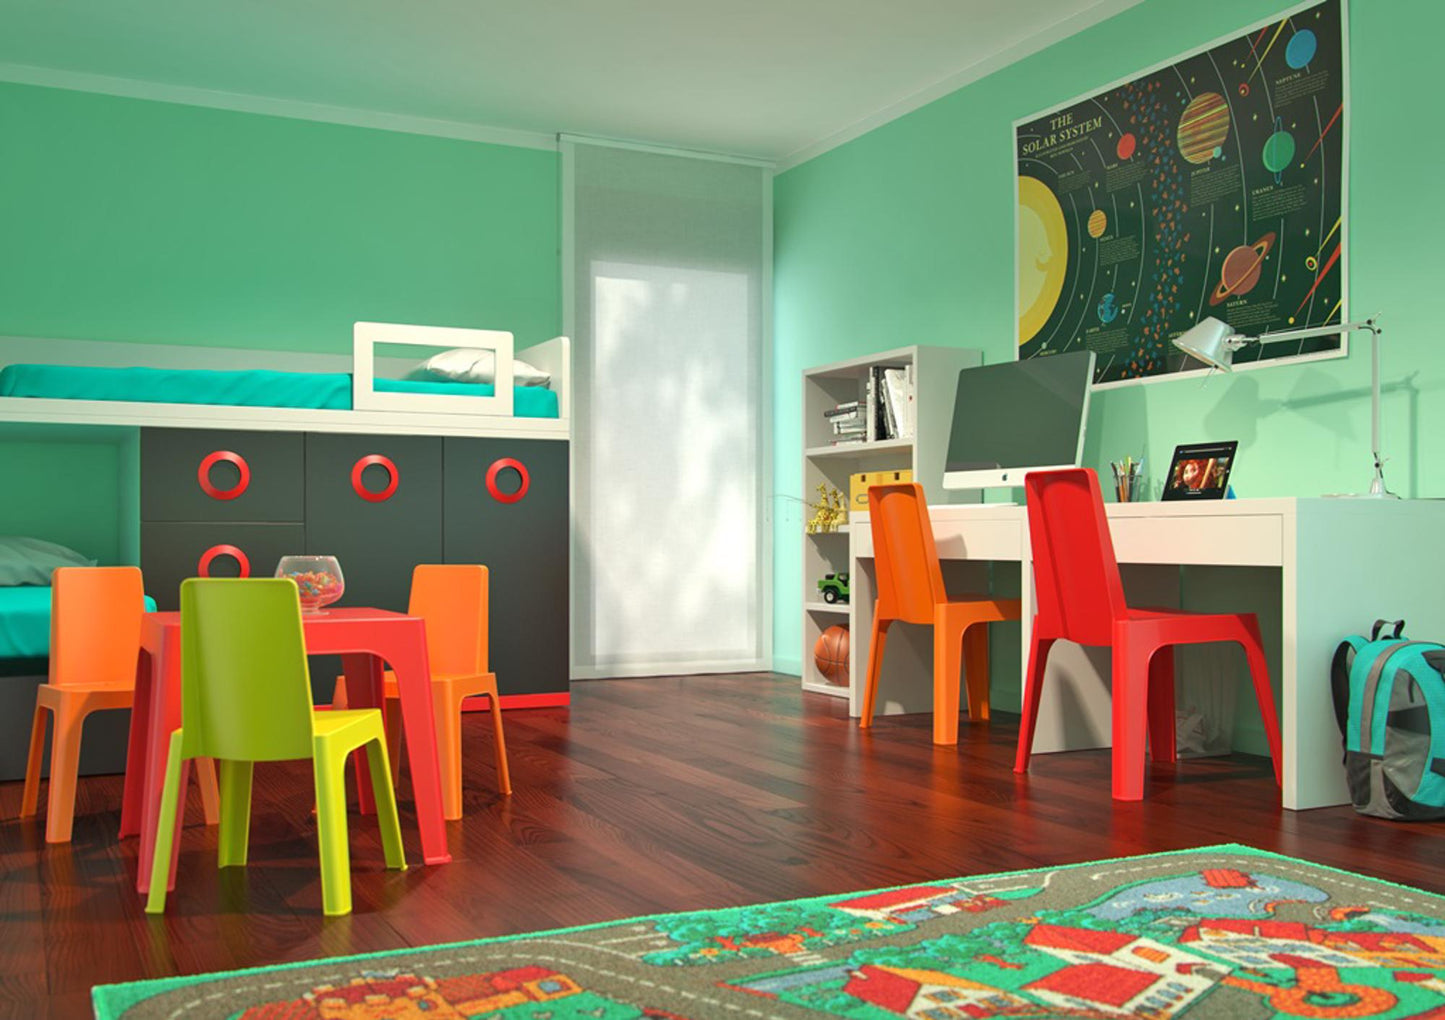 Garbar julieta set 4+1 infantil silla-mesa interior, exterior azul cielo/rosa/rojo/naranja/verde lima